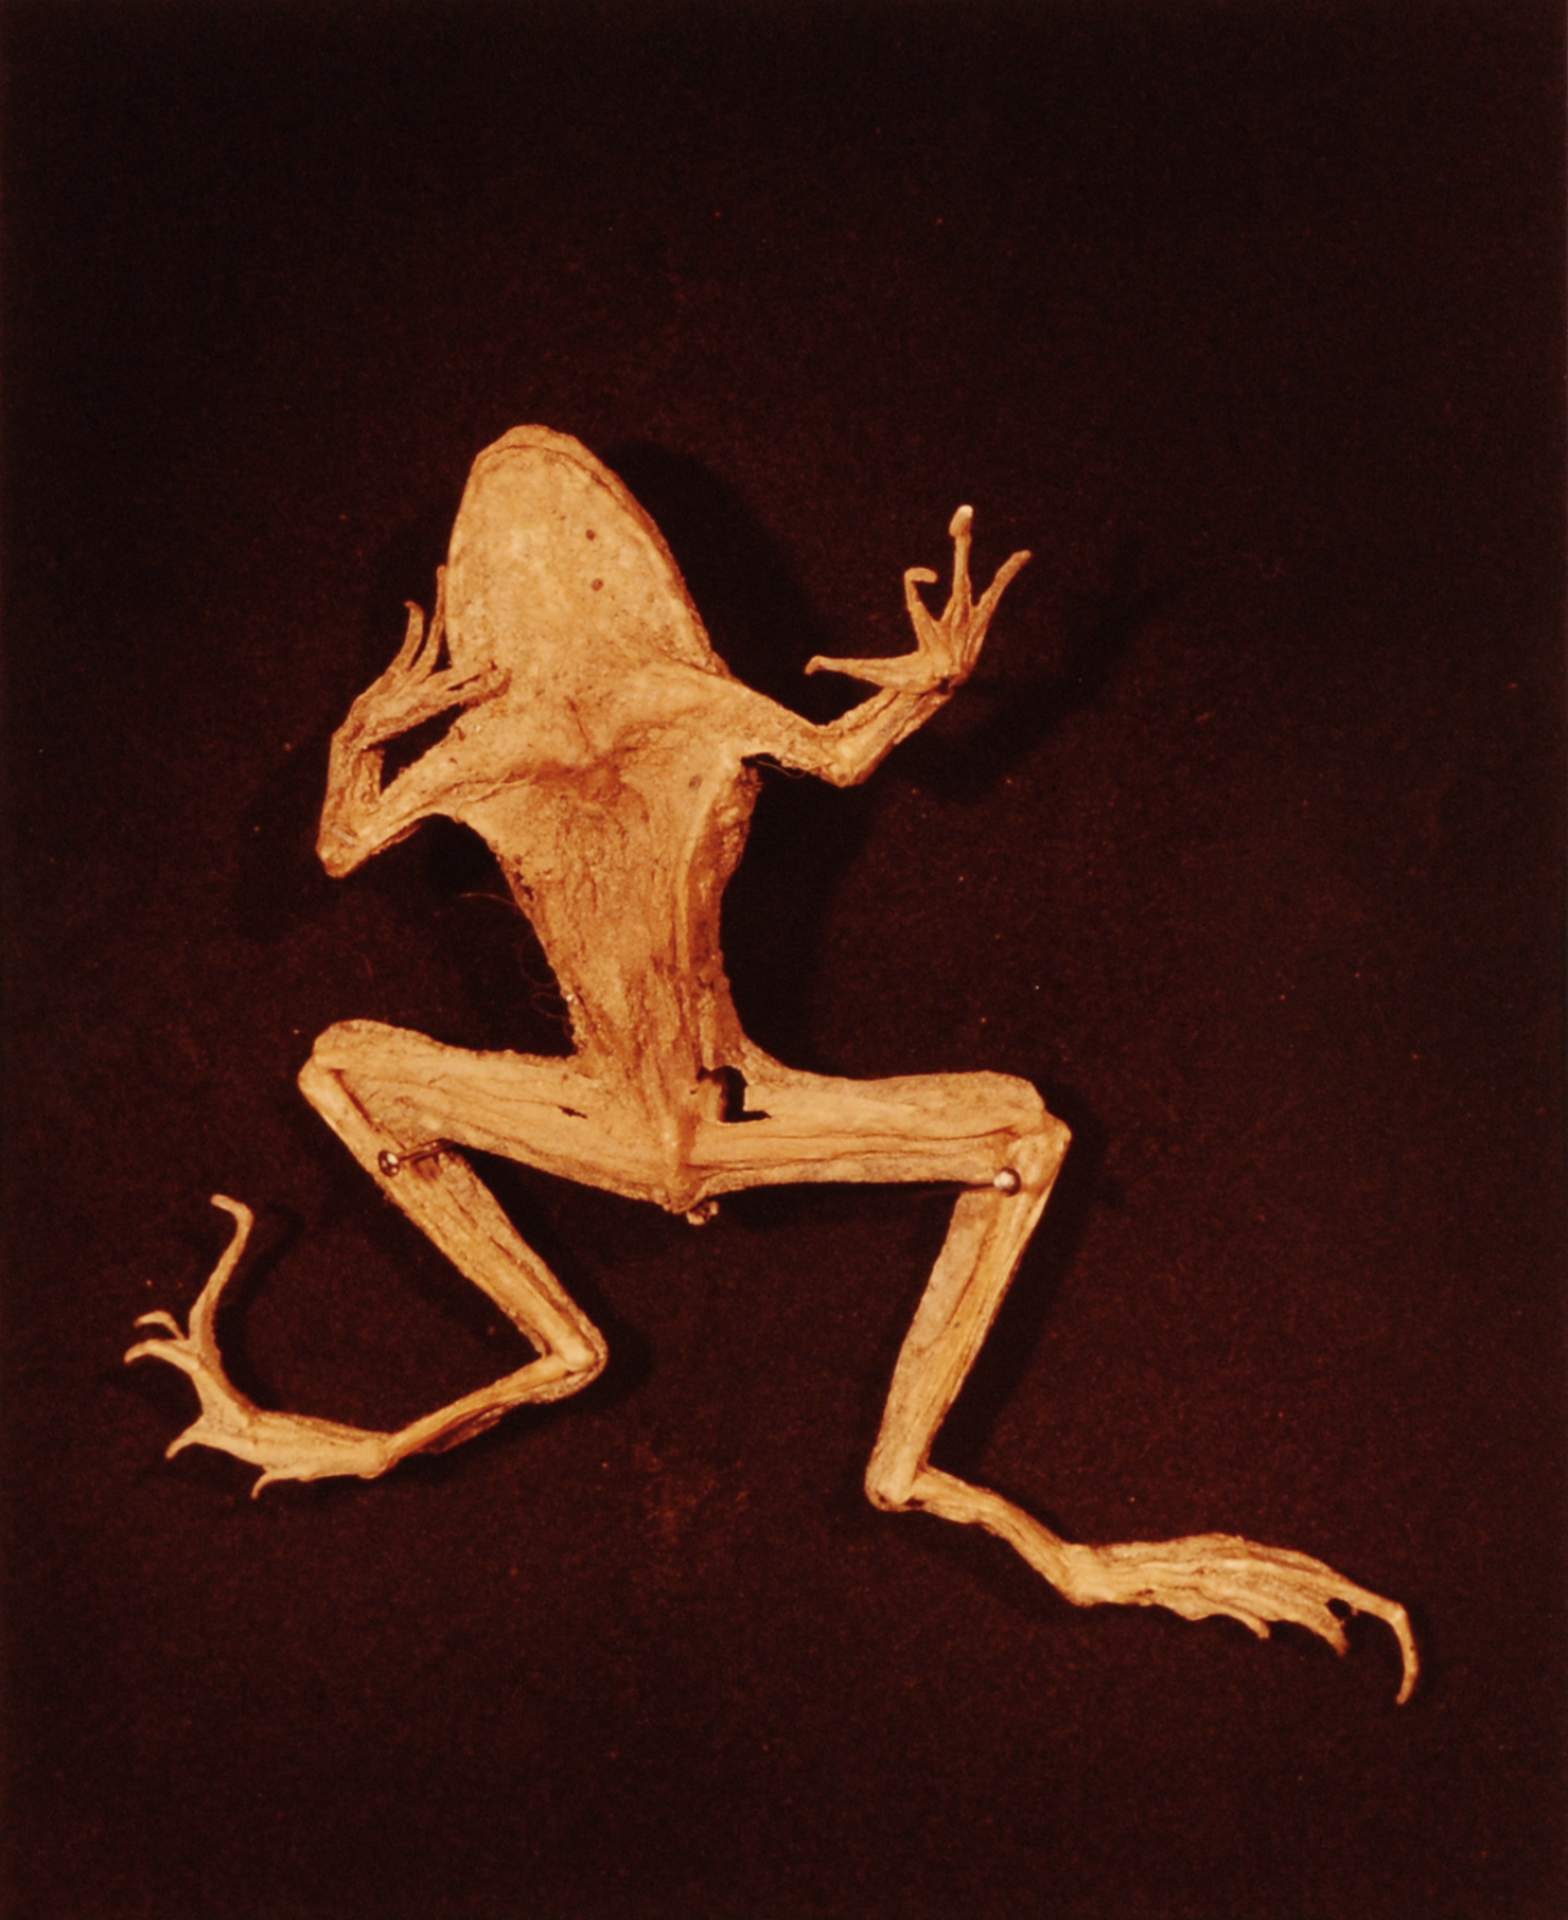 XI. Grassfrog (Rana pipiens)